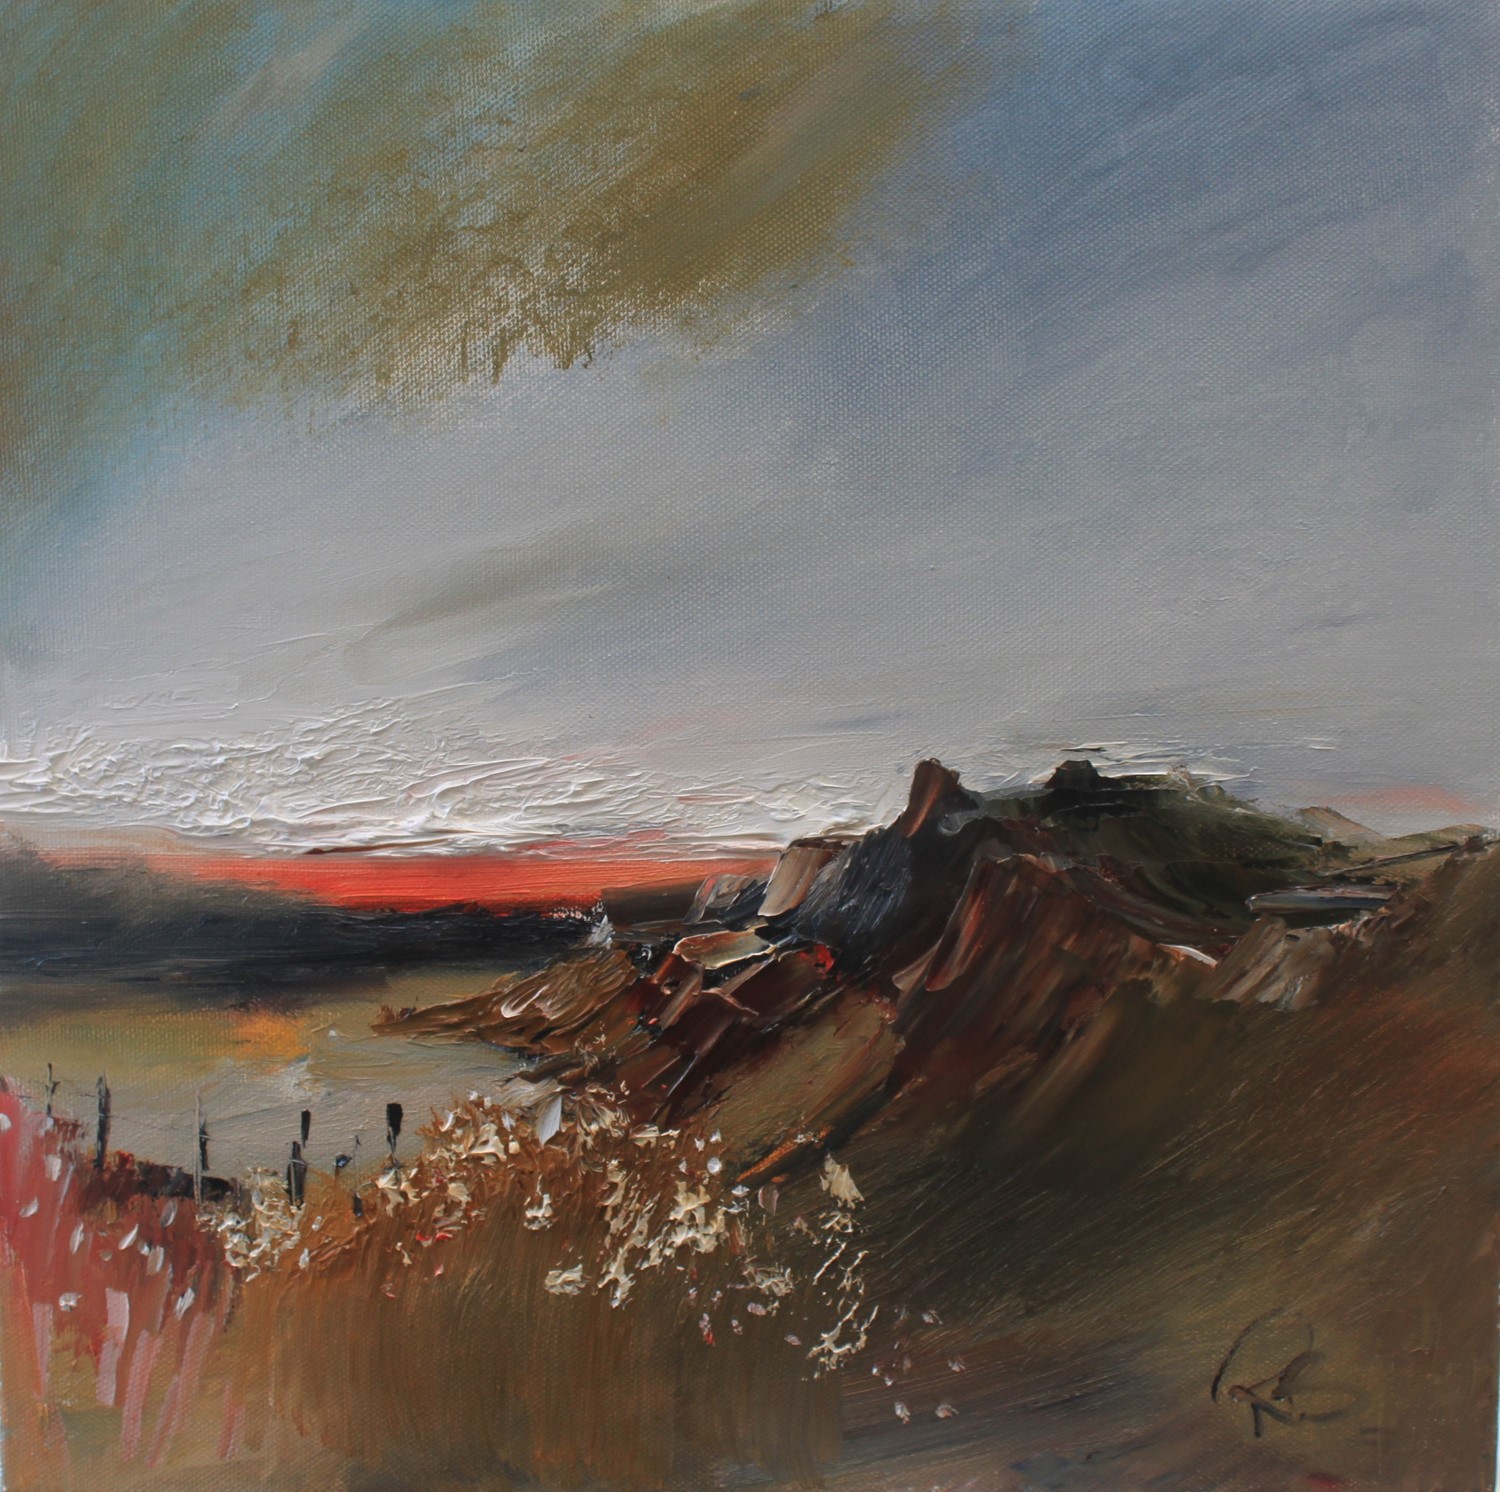 'The Glen at Sunset' by artist Rosanne Barr